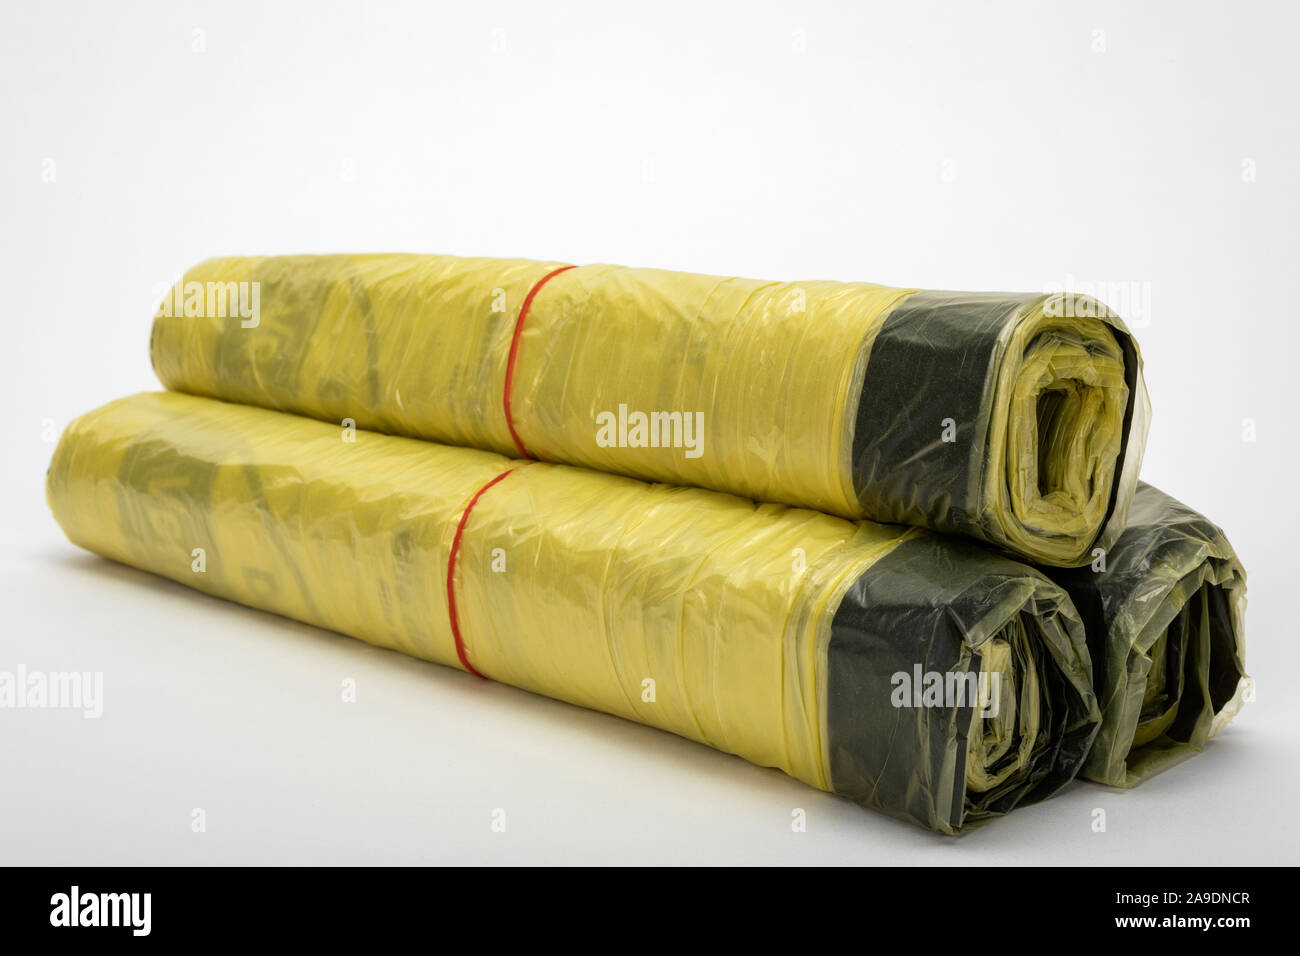 3 rolls of yellow sacks, plastic sacks for household waste separation, Stock Photo